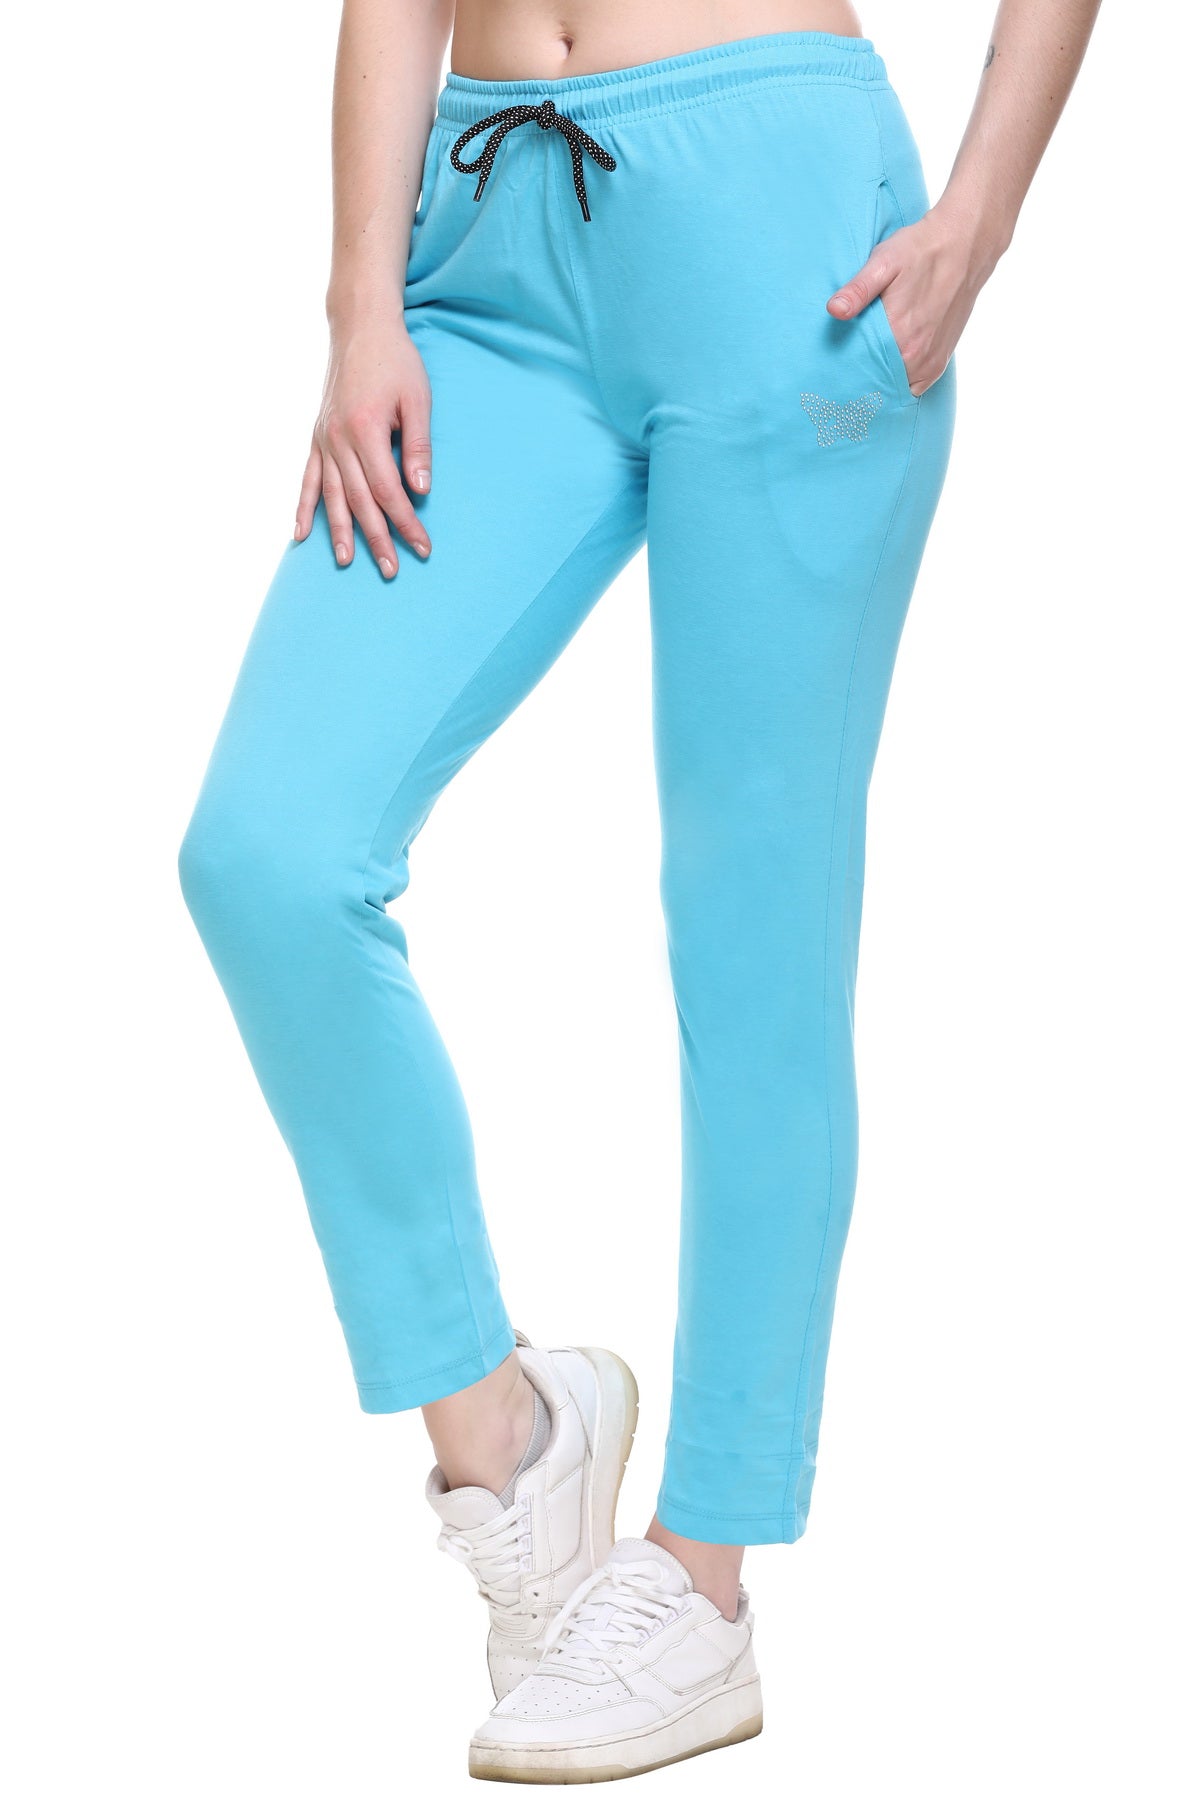 Buy Sky Blue Yoga Pants Online In India -  India